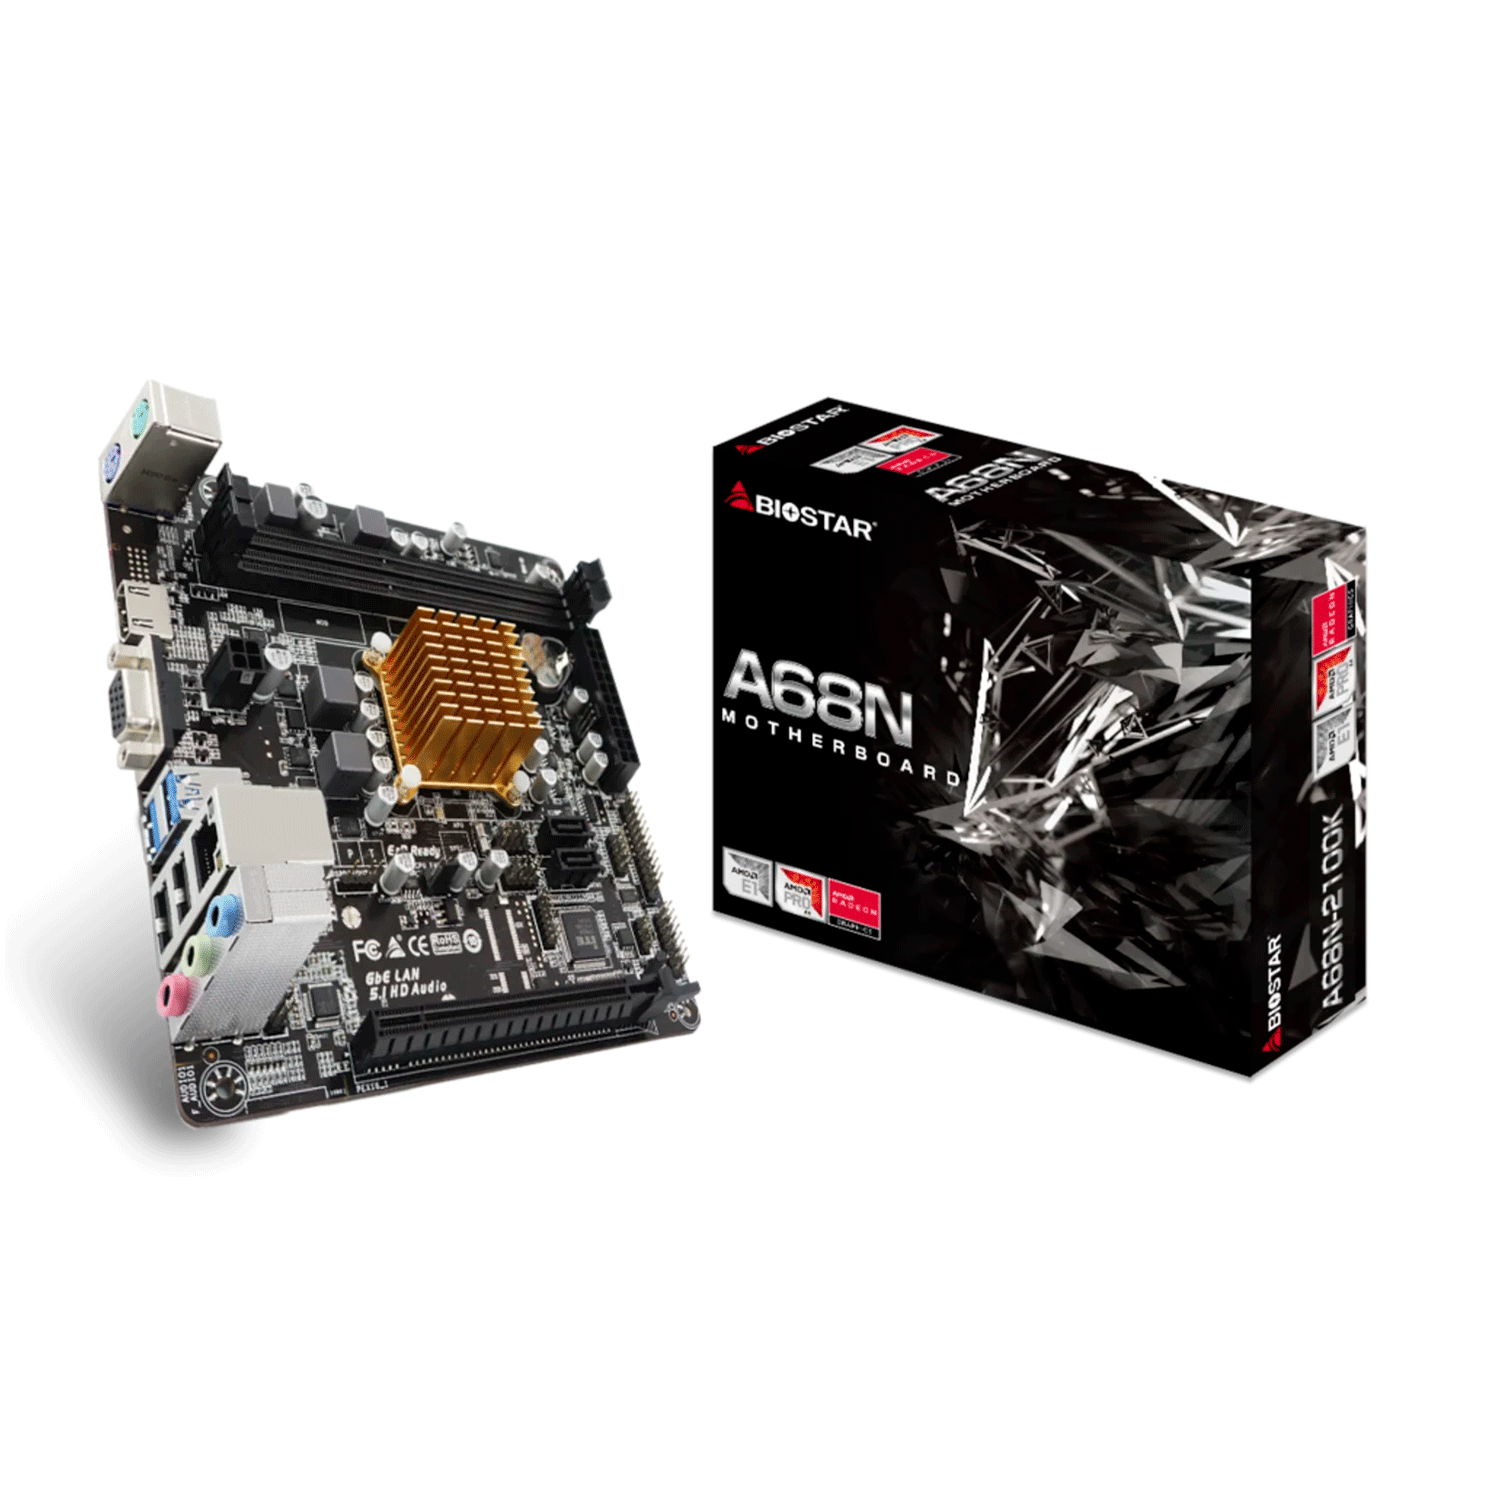 Placa Mãe Biostar A68N 2100K Chipset AMD Beema DDR3 Mini ITX Processador Dual Core AMD E1-6010 2.0